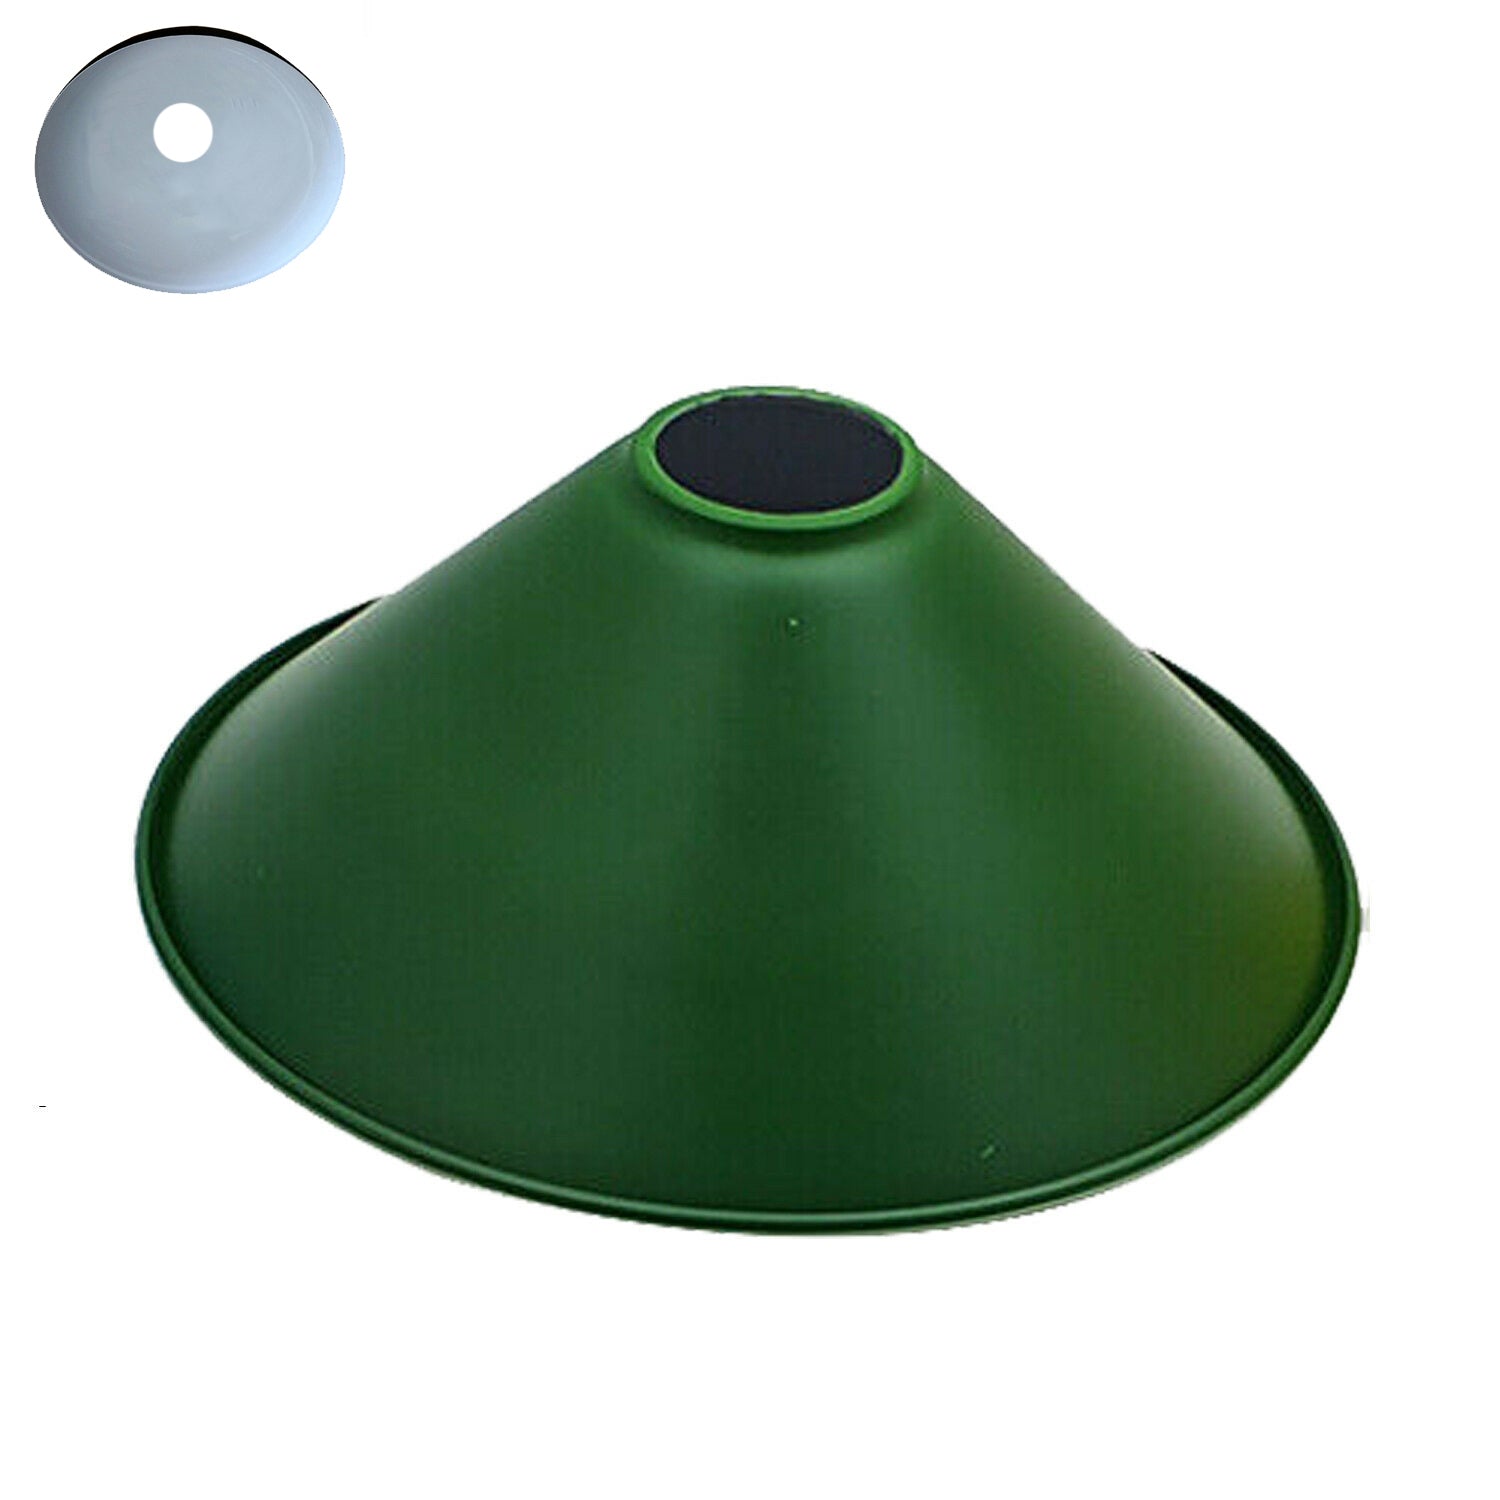 Modern Ceiling Pendant Light Shades Green Colour Lamp Shades Easy Fit~1108 - LEDSone UK Ltd